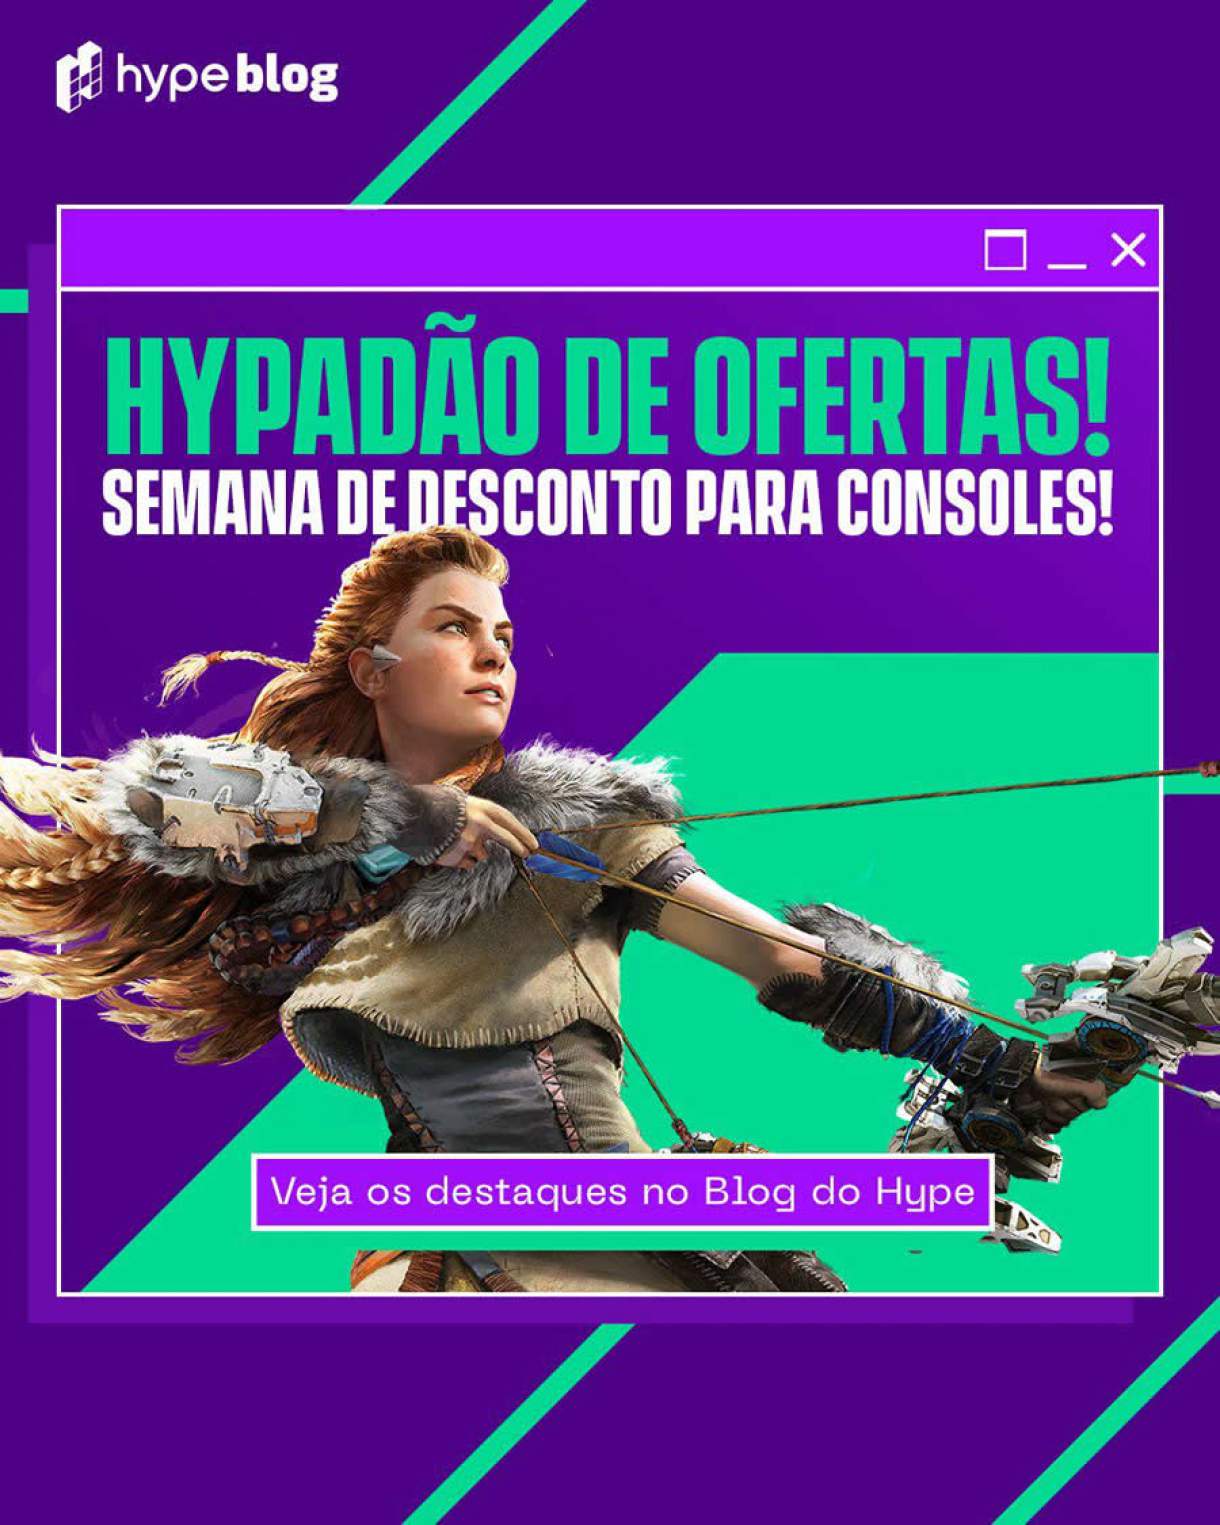 R$200 Xbox Store - Cartão-Presente Digital - [Exclusivo Brasil]